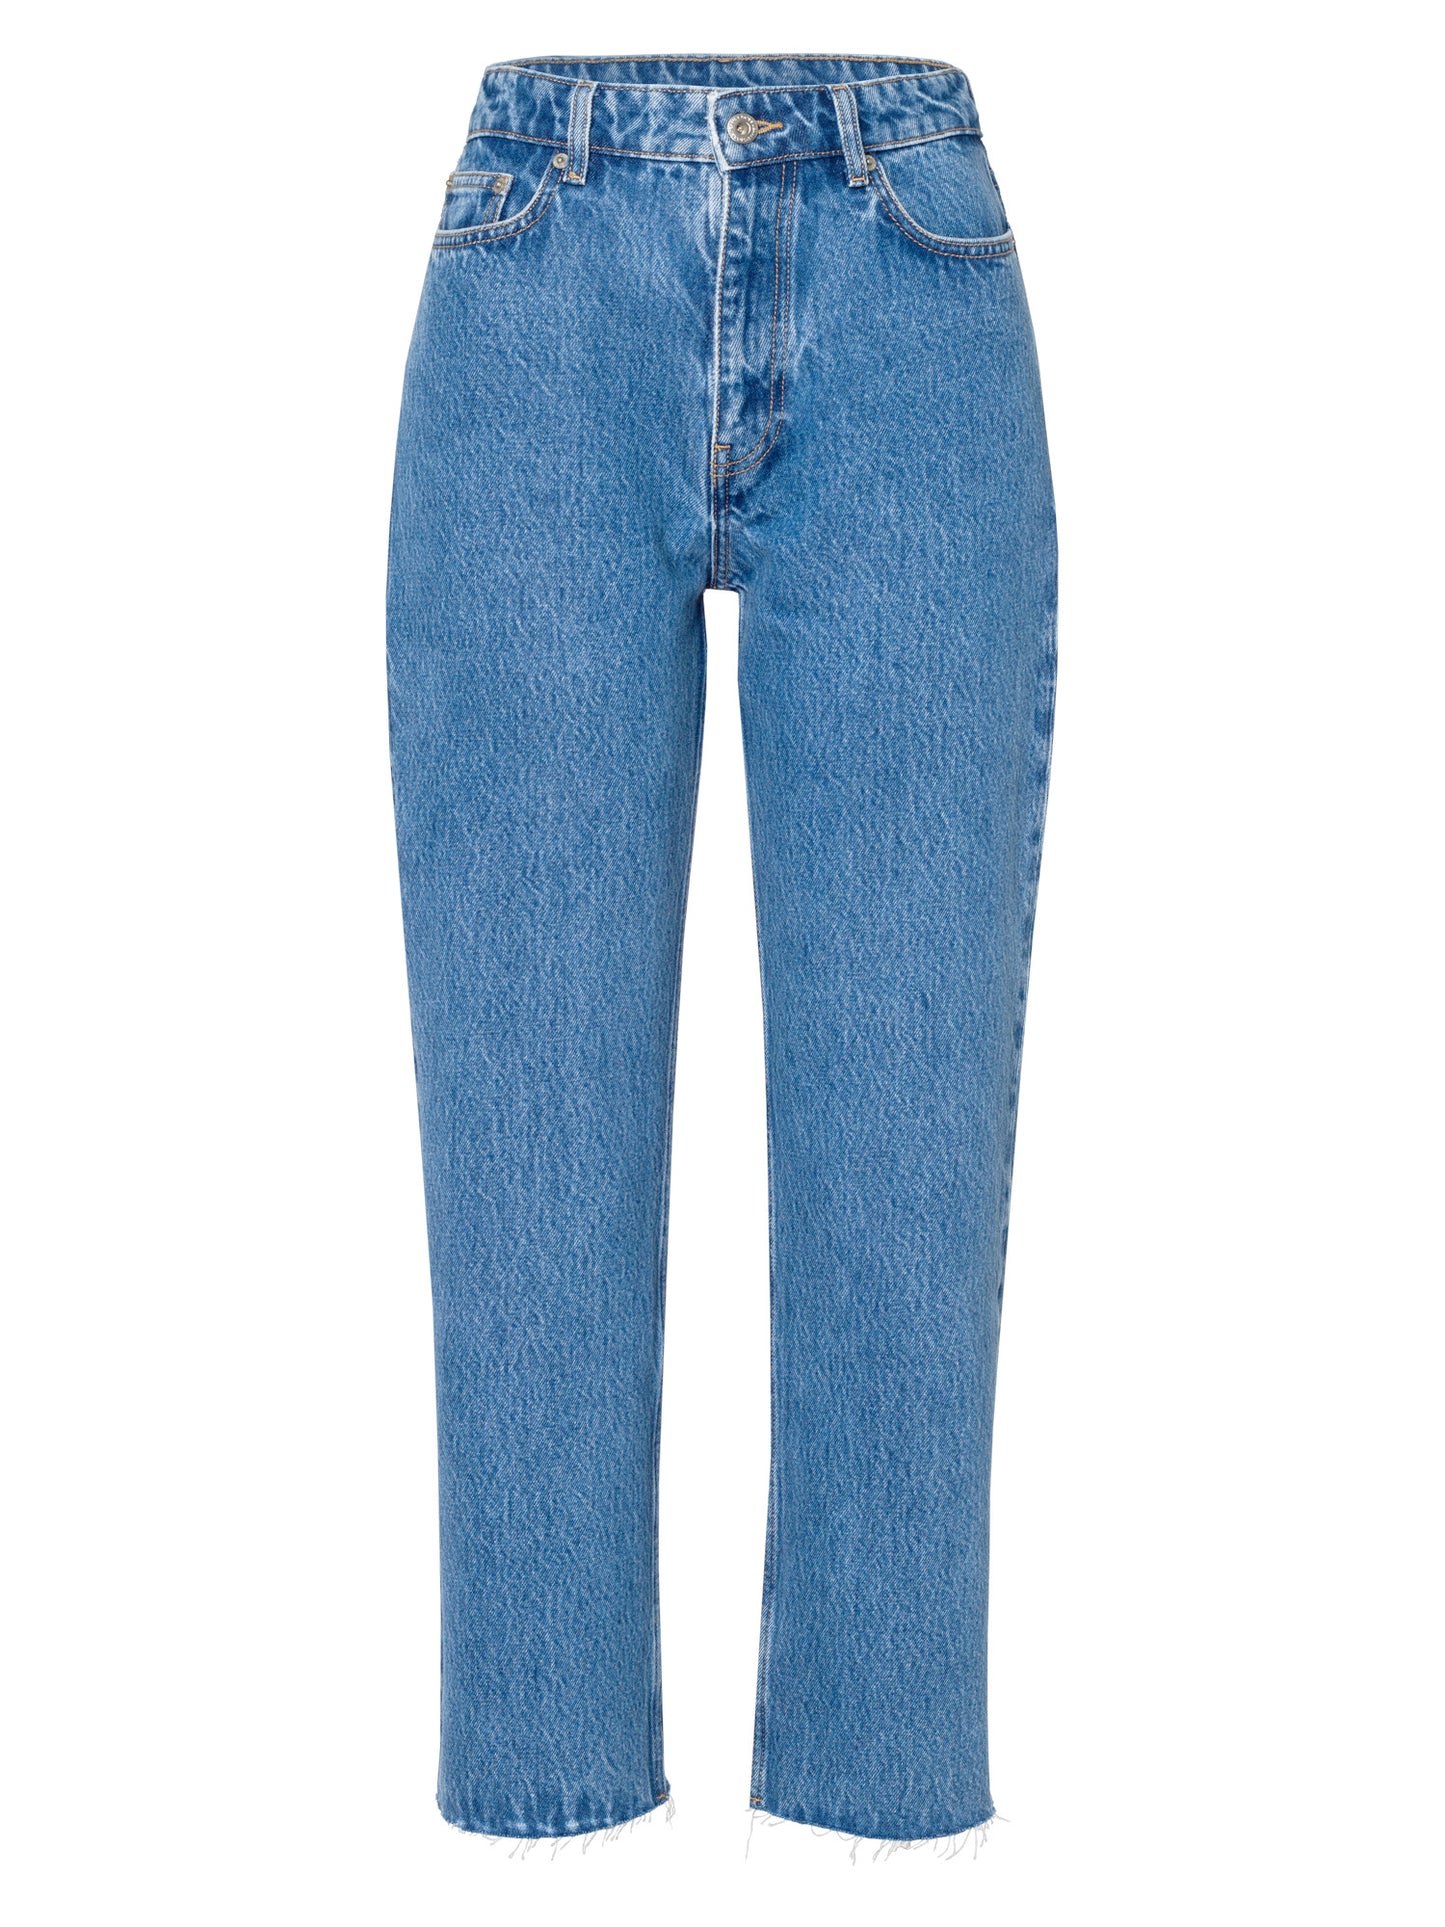 Karlie women's jeans straight fit high waist cropped medium blue